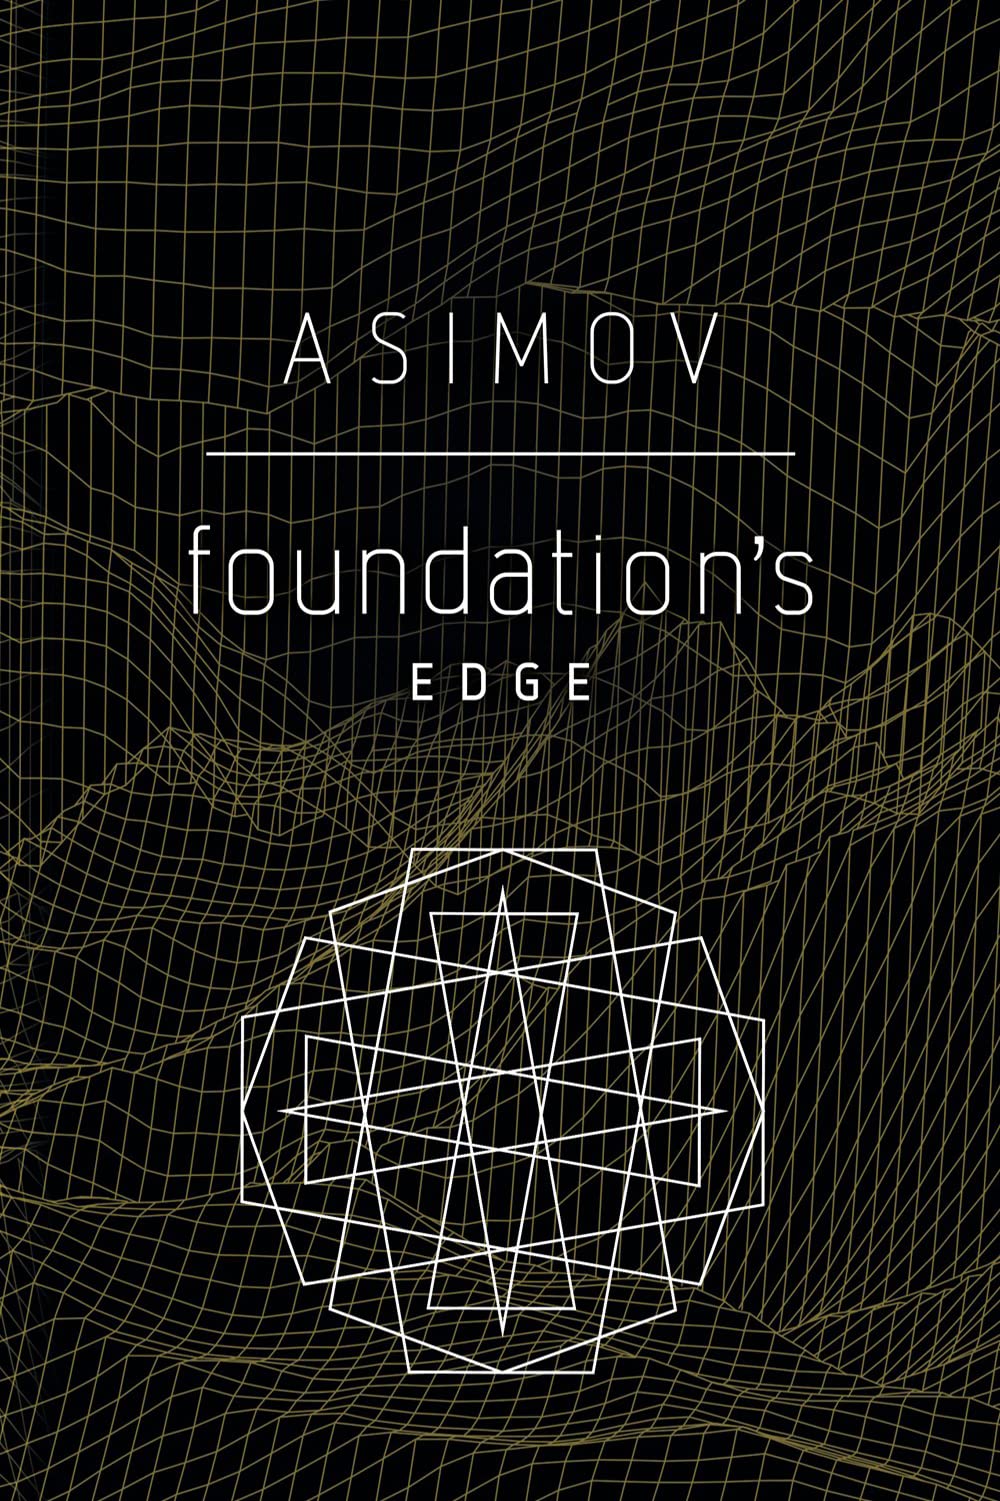 Foundation Edge by Isaac Asimov